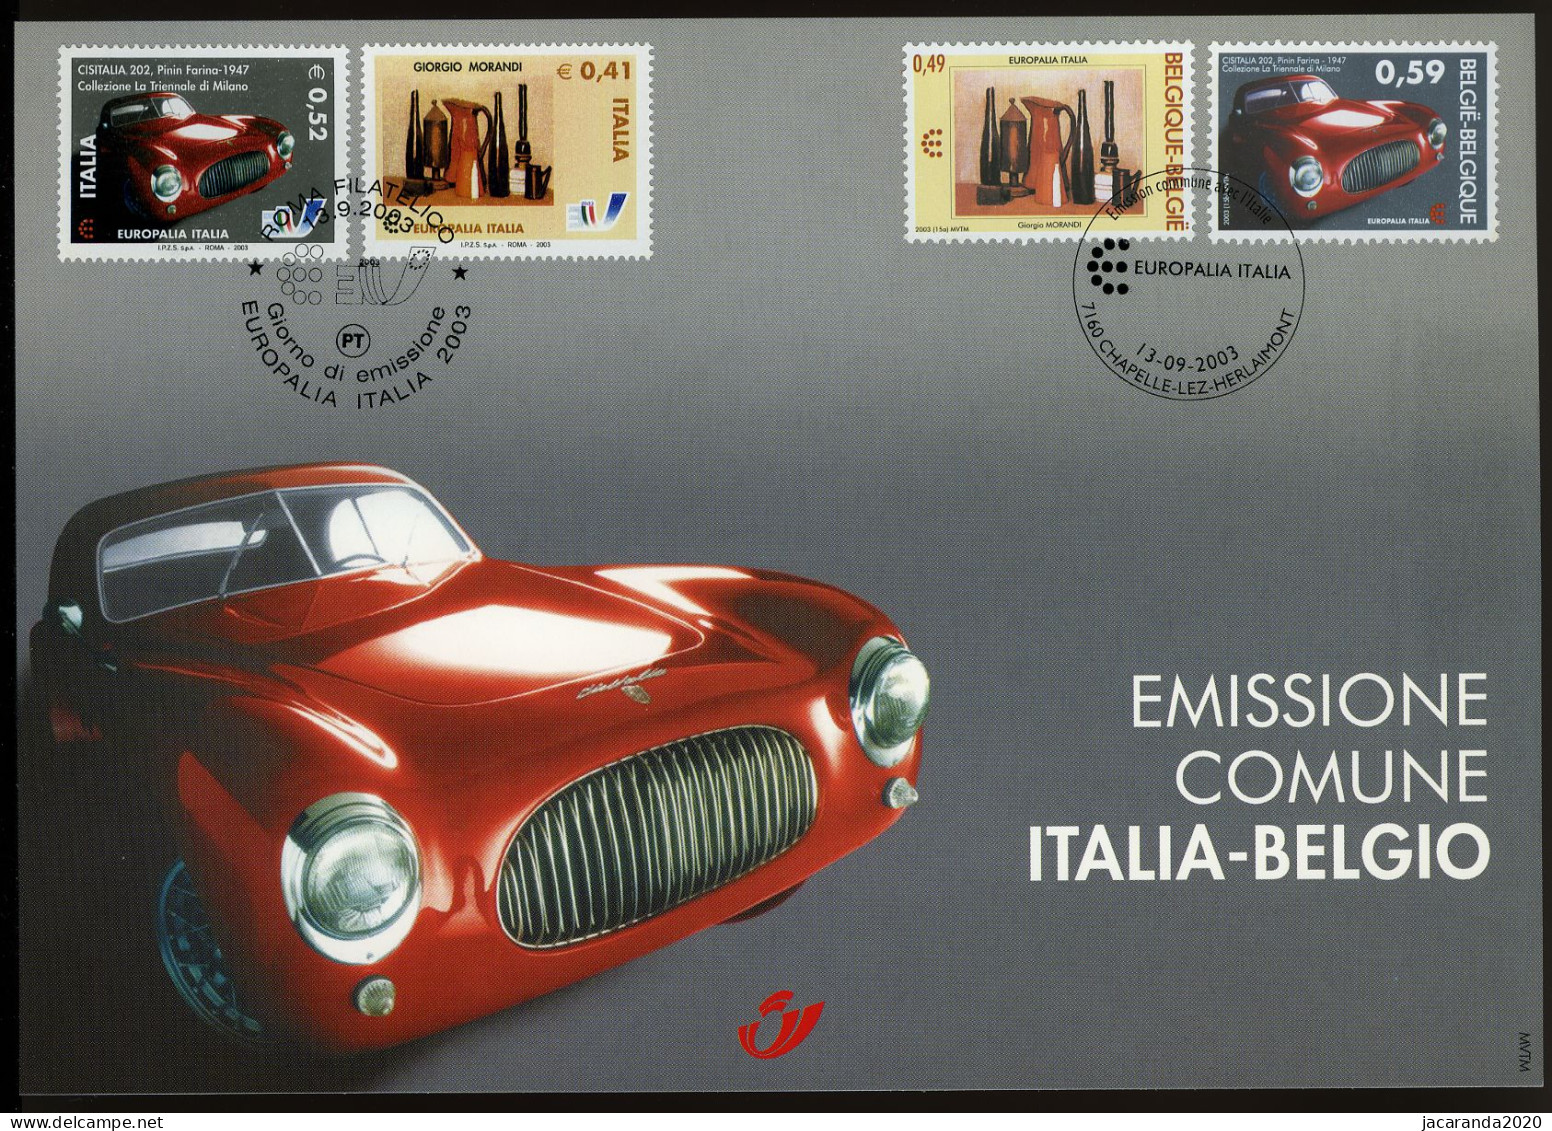 België 3205 HK - Europalia Italië - Giorgio Morandi - Pinin Farina - Gem. Uitgifte Met Italië - 2003 - Cartoline Commemorative - Emissioni Congiunte [HK]